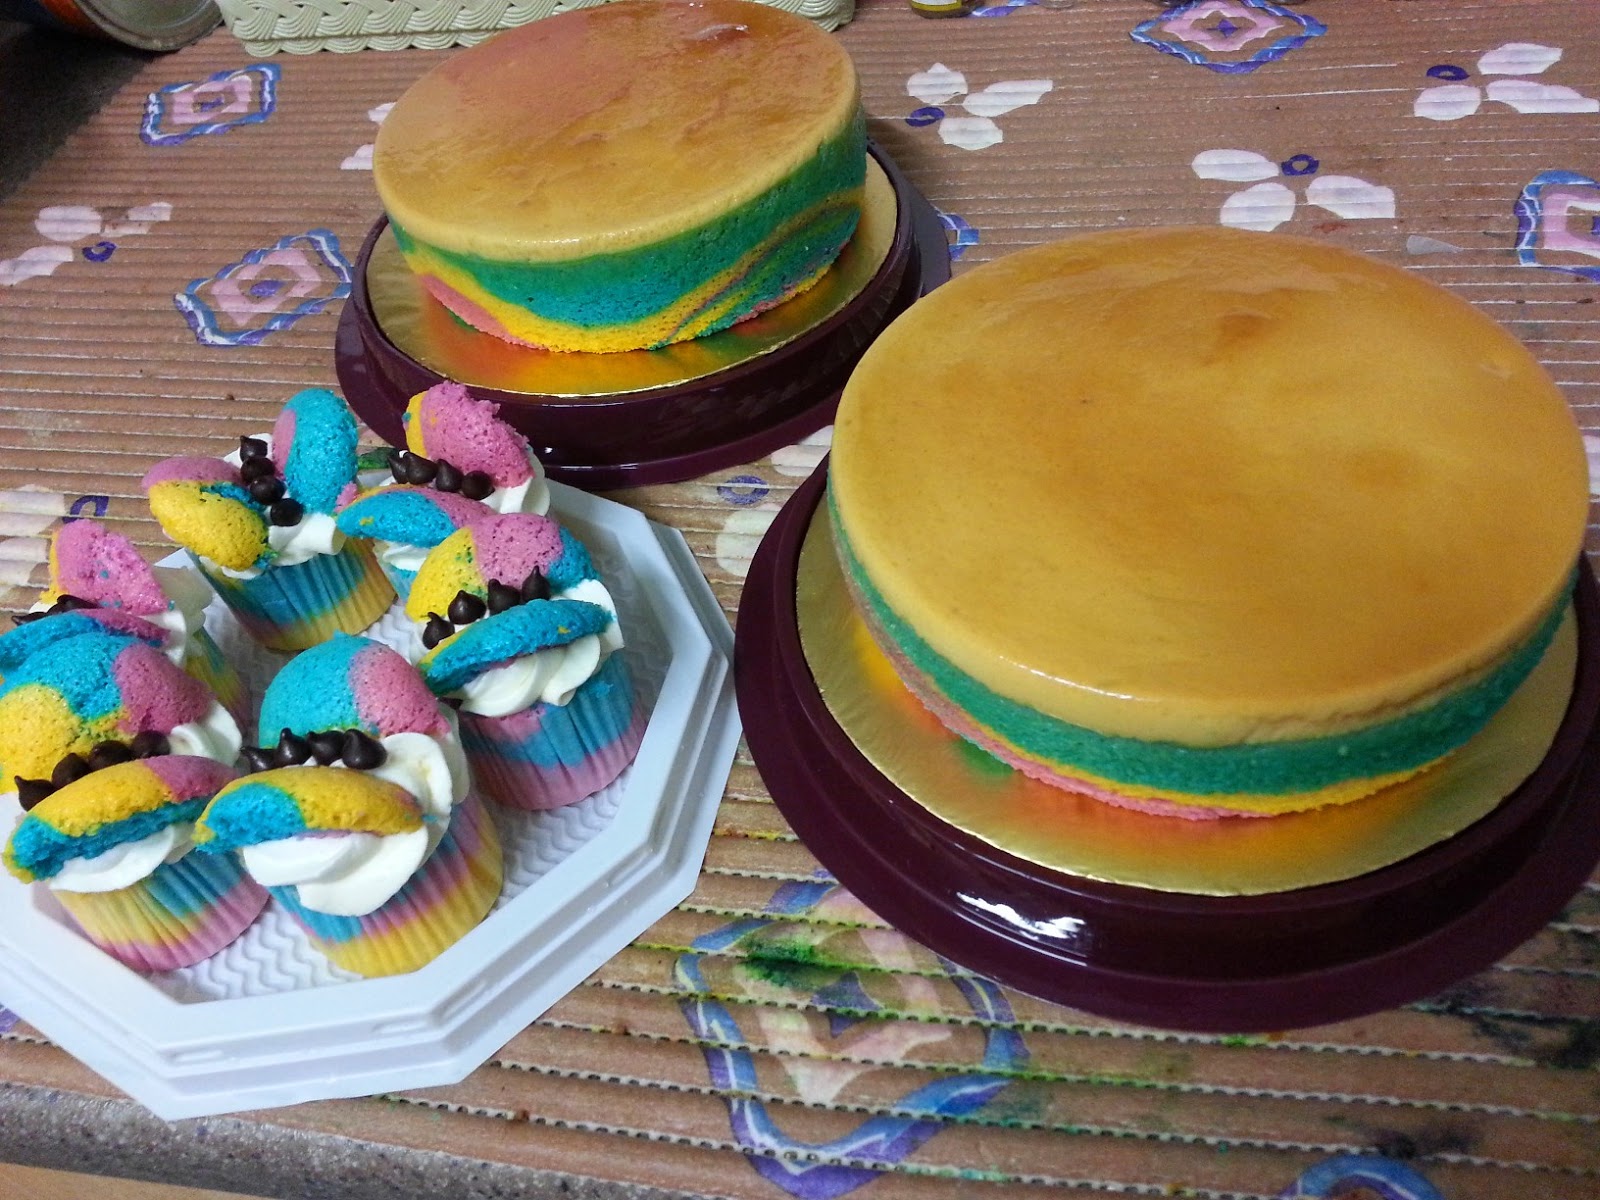 Nyummcakes: kek karamel bulat & kek cawan rama-rama